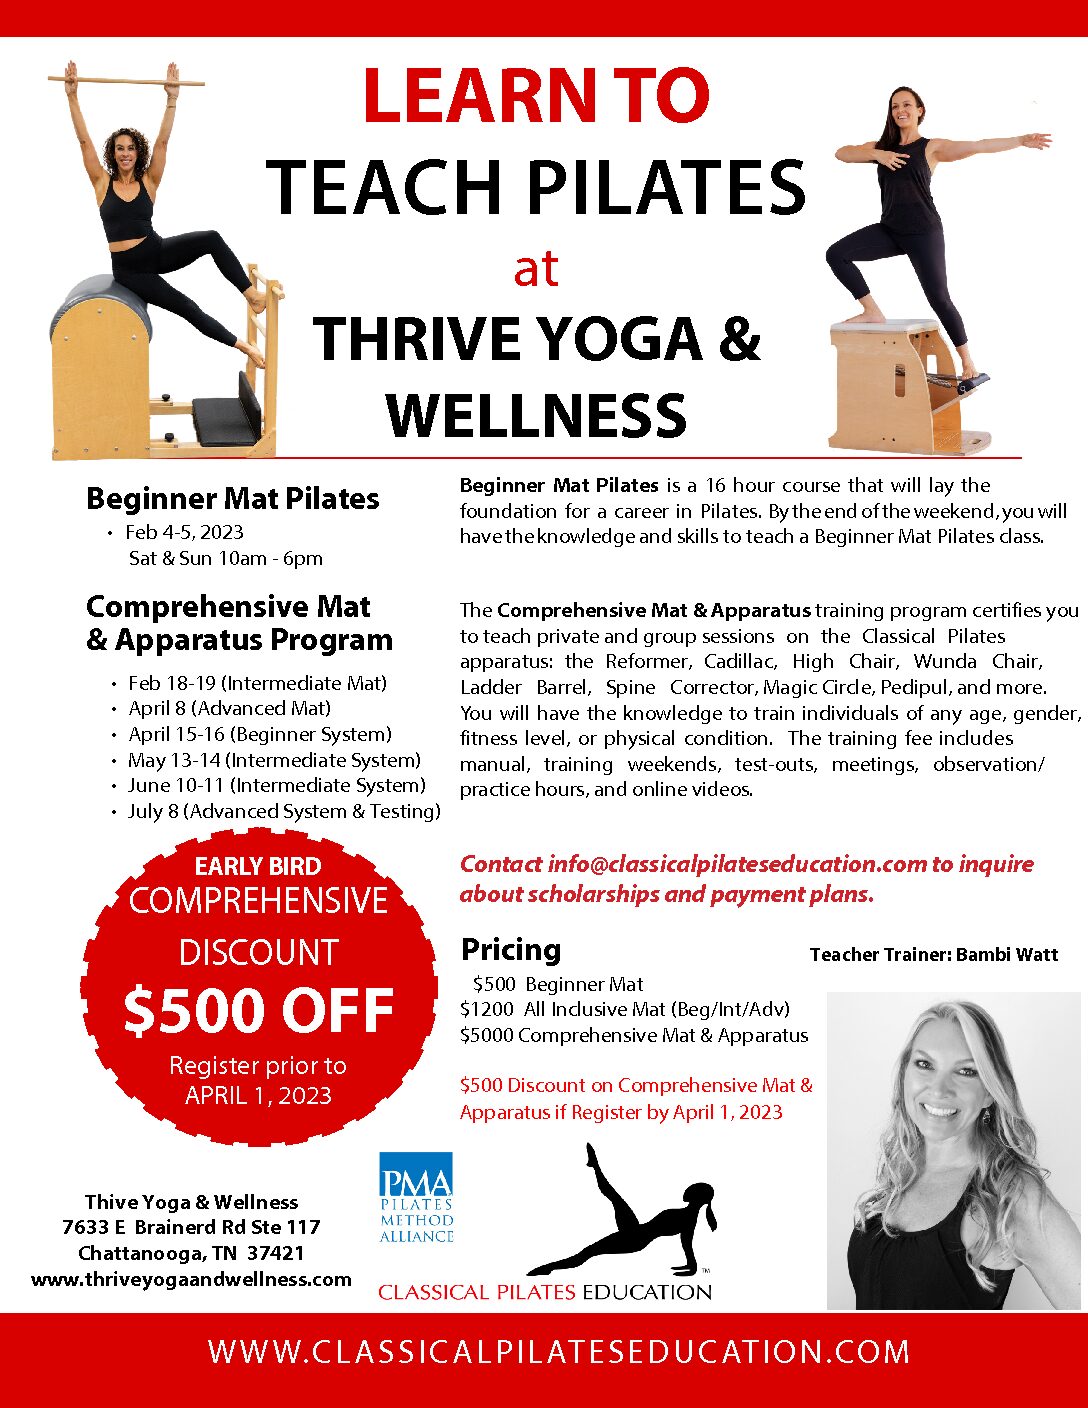 Thrive Yoga & Wellness in Chattanooga, TN